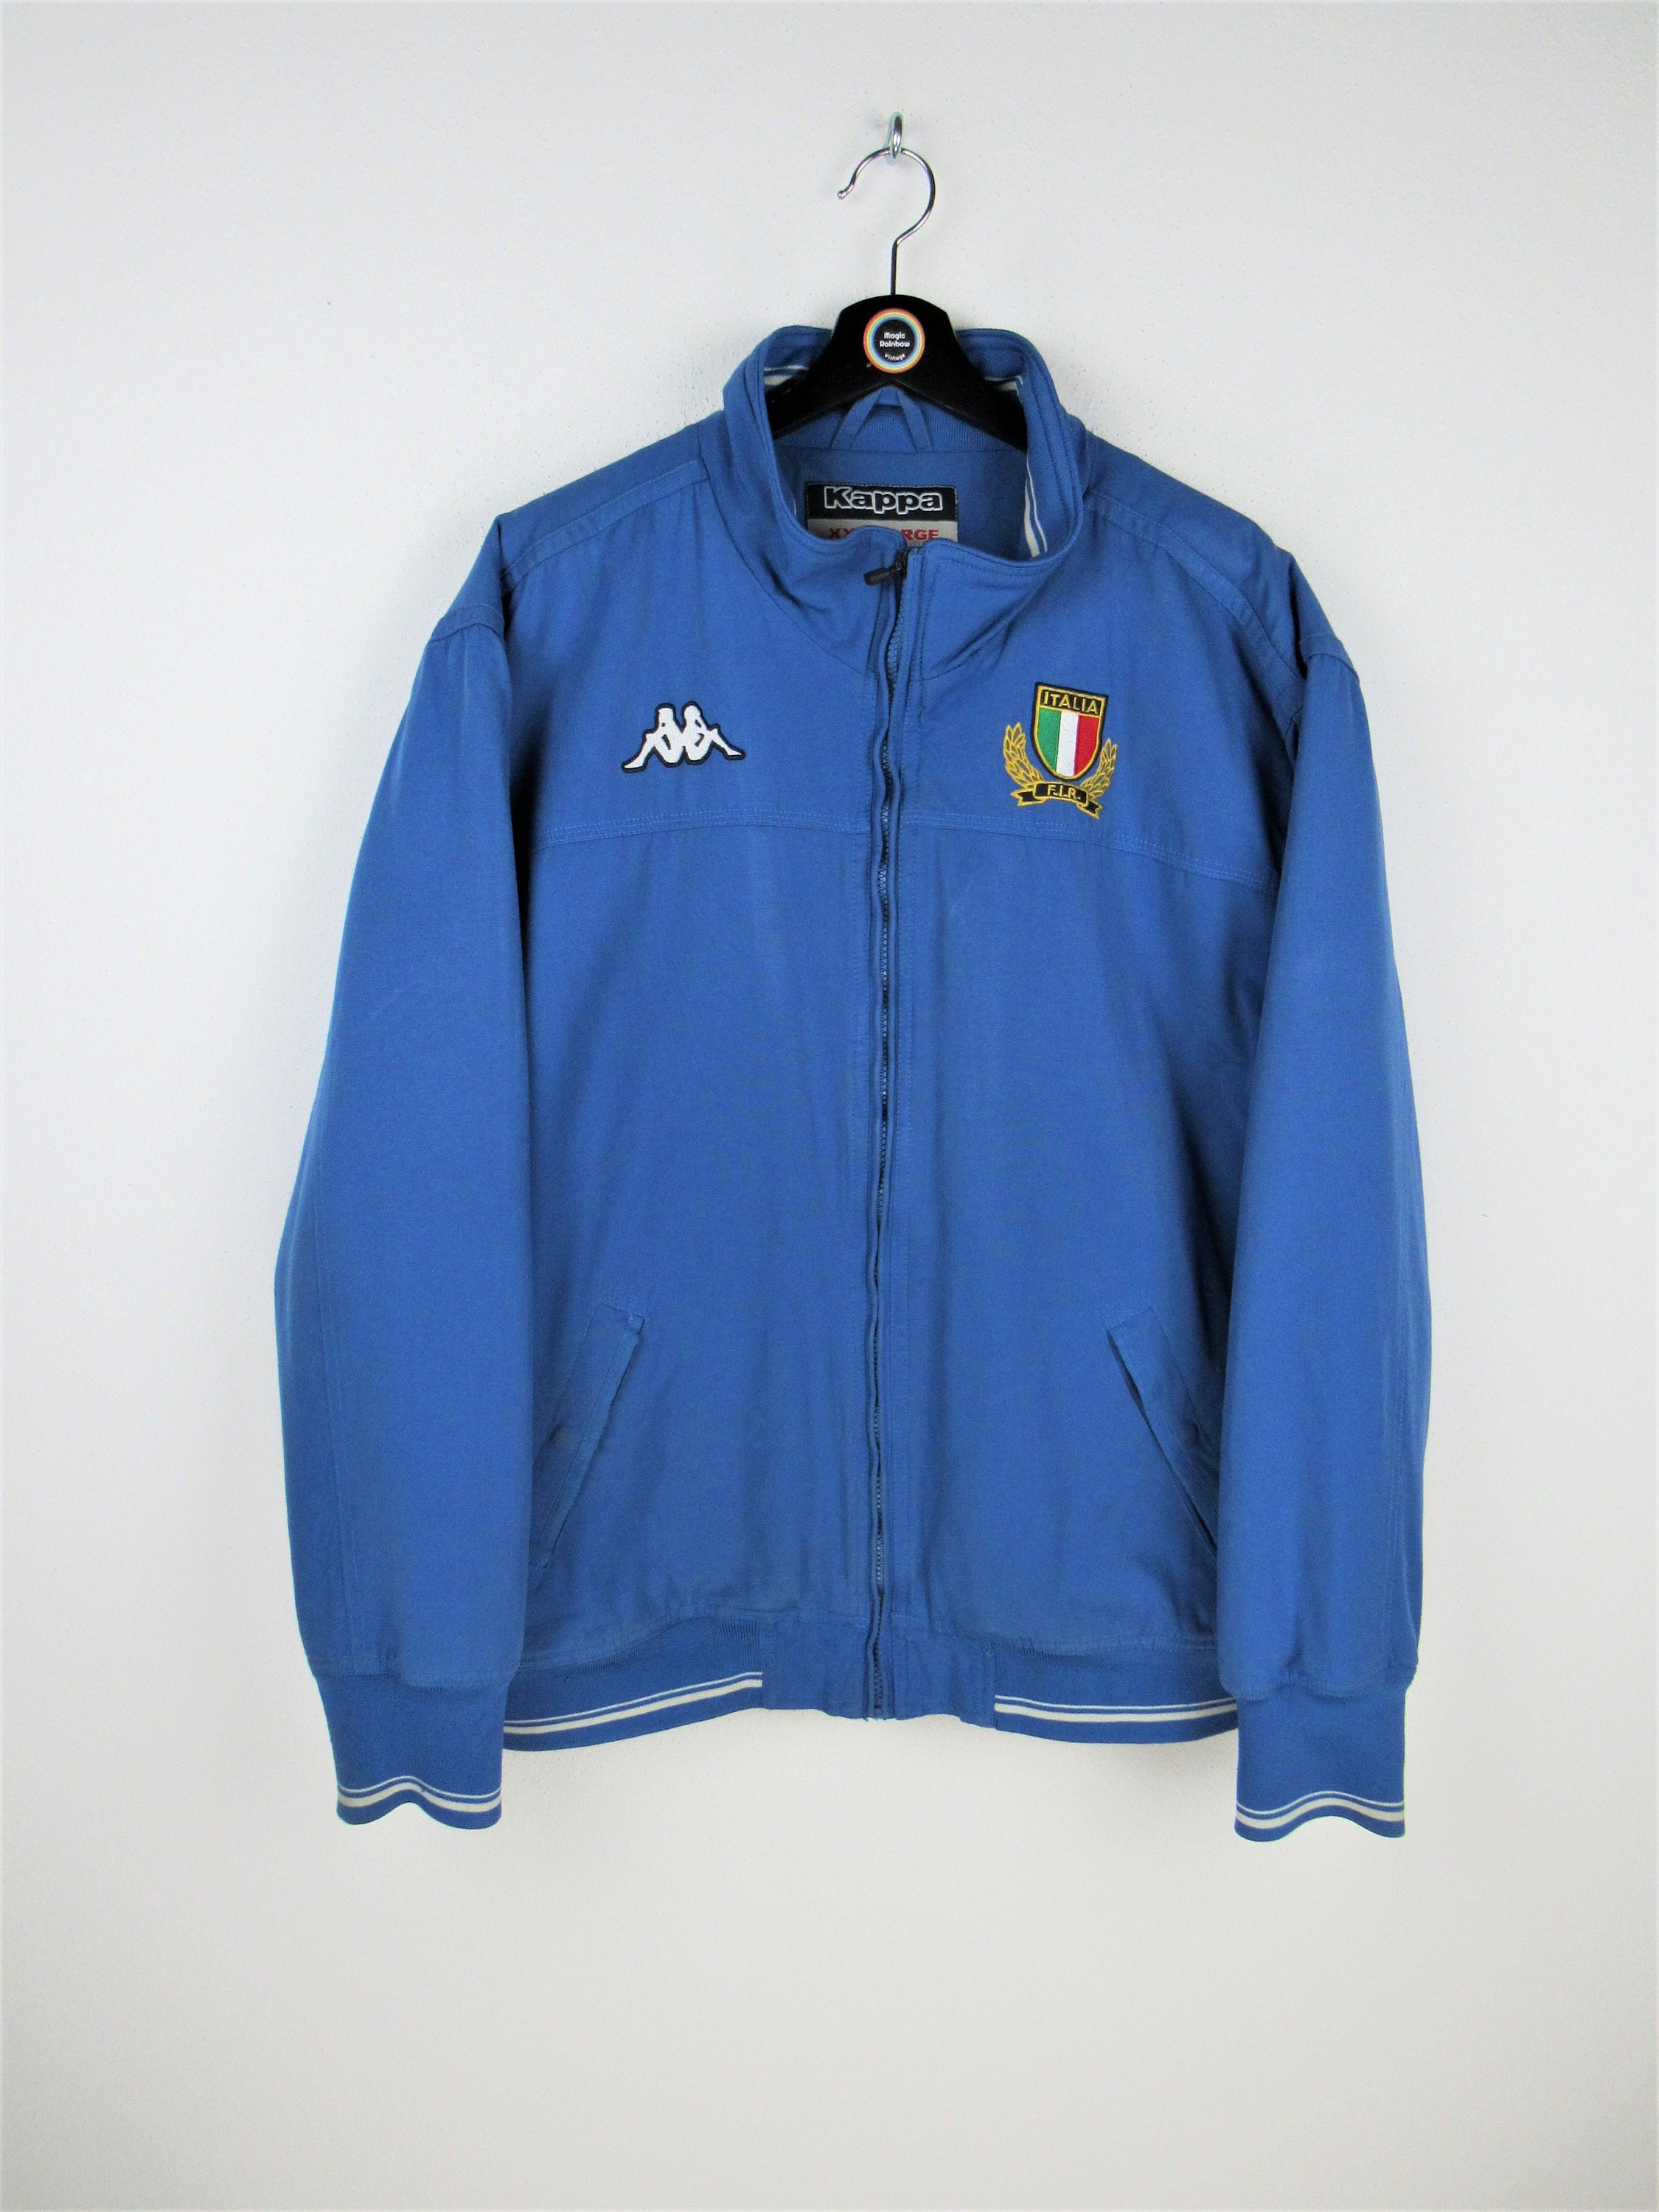 Excentriek Machu Picchu zwaarlijvigheid Kappa Federazione Italiana Rugby Vintage 80's Jacket - Etsy